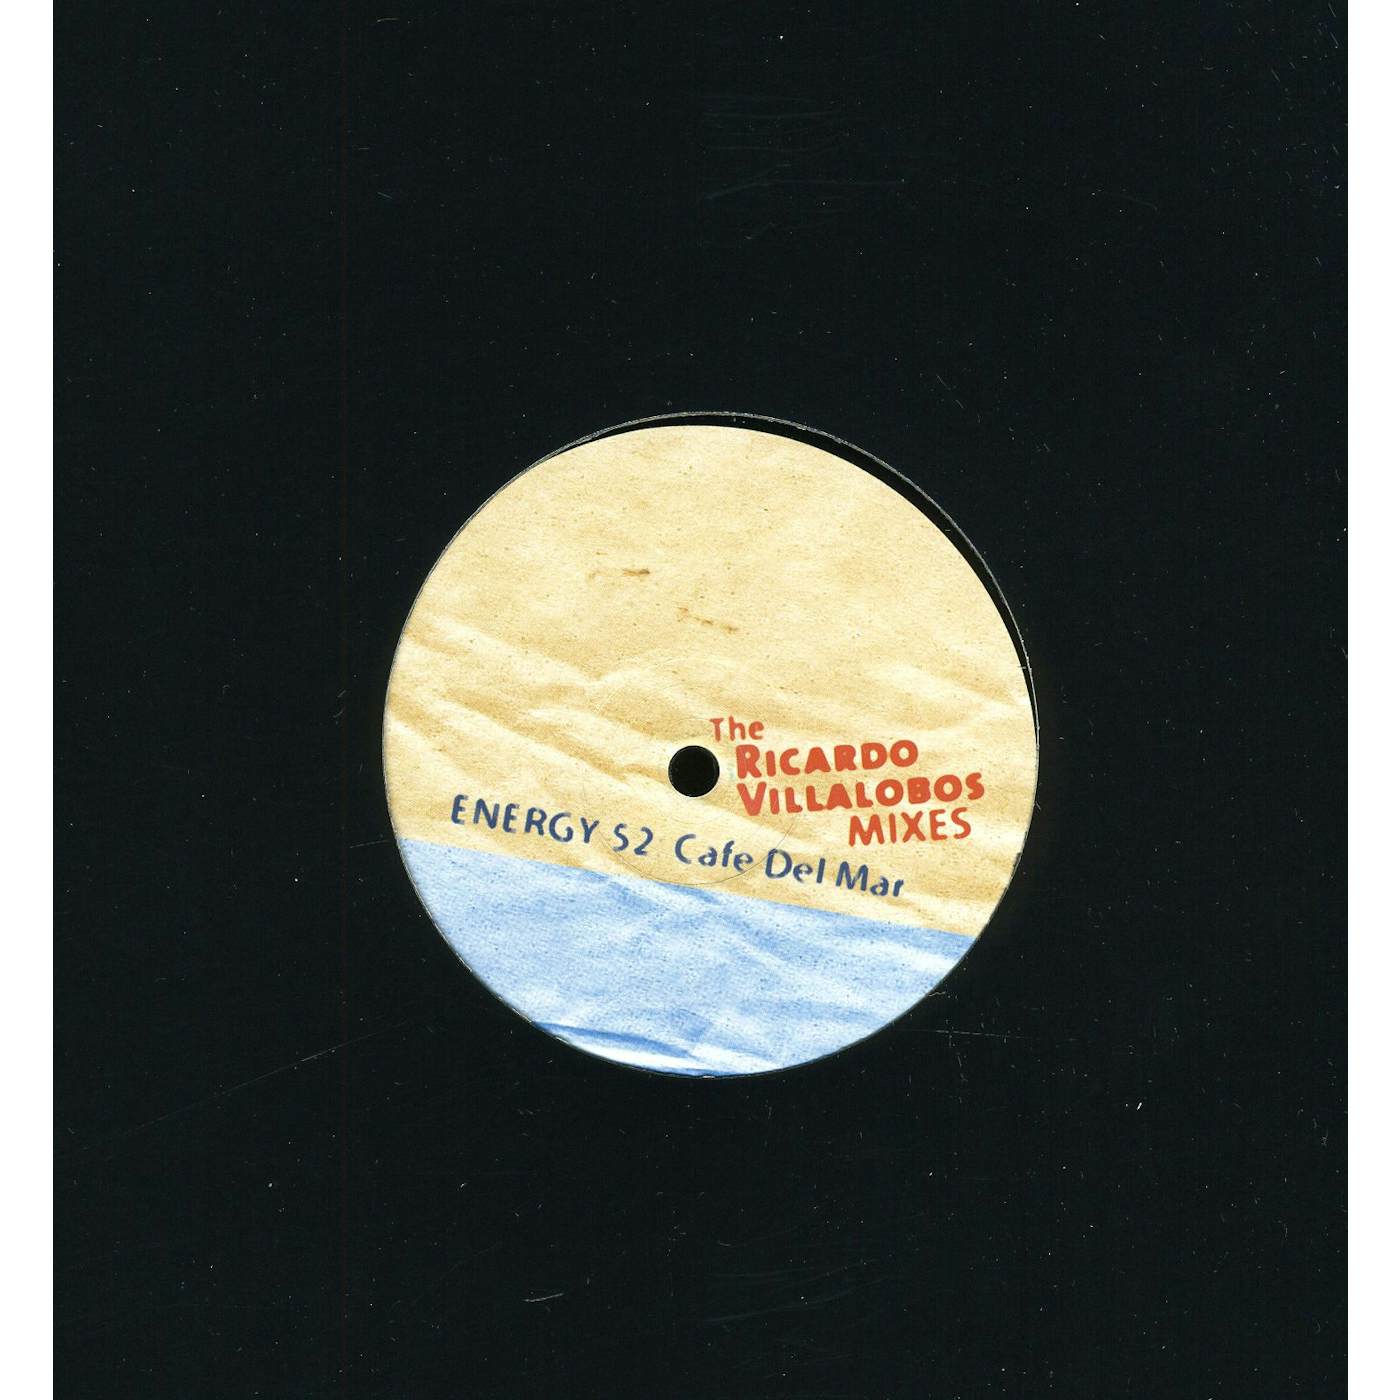 Energy 52 CAFE DEL MAR: RICARDO VILLALOBOS REMIXES Vinyl Record